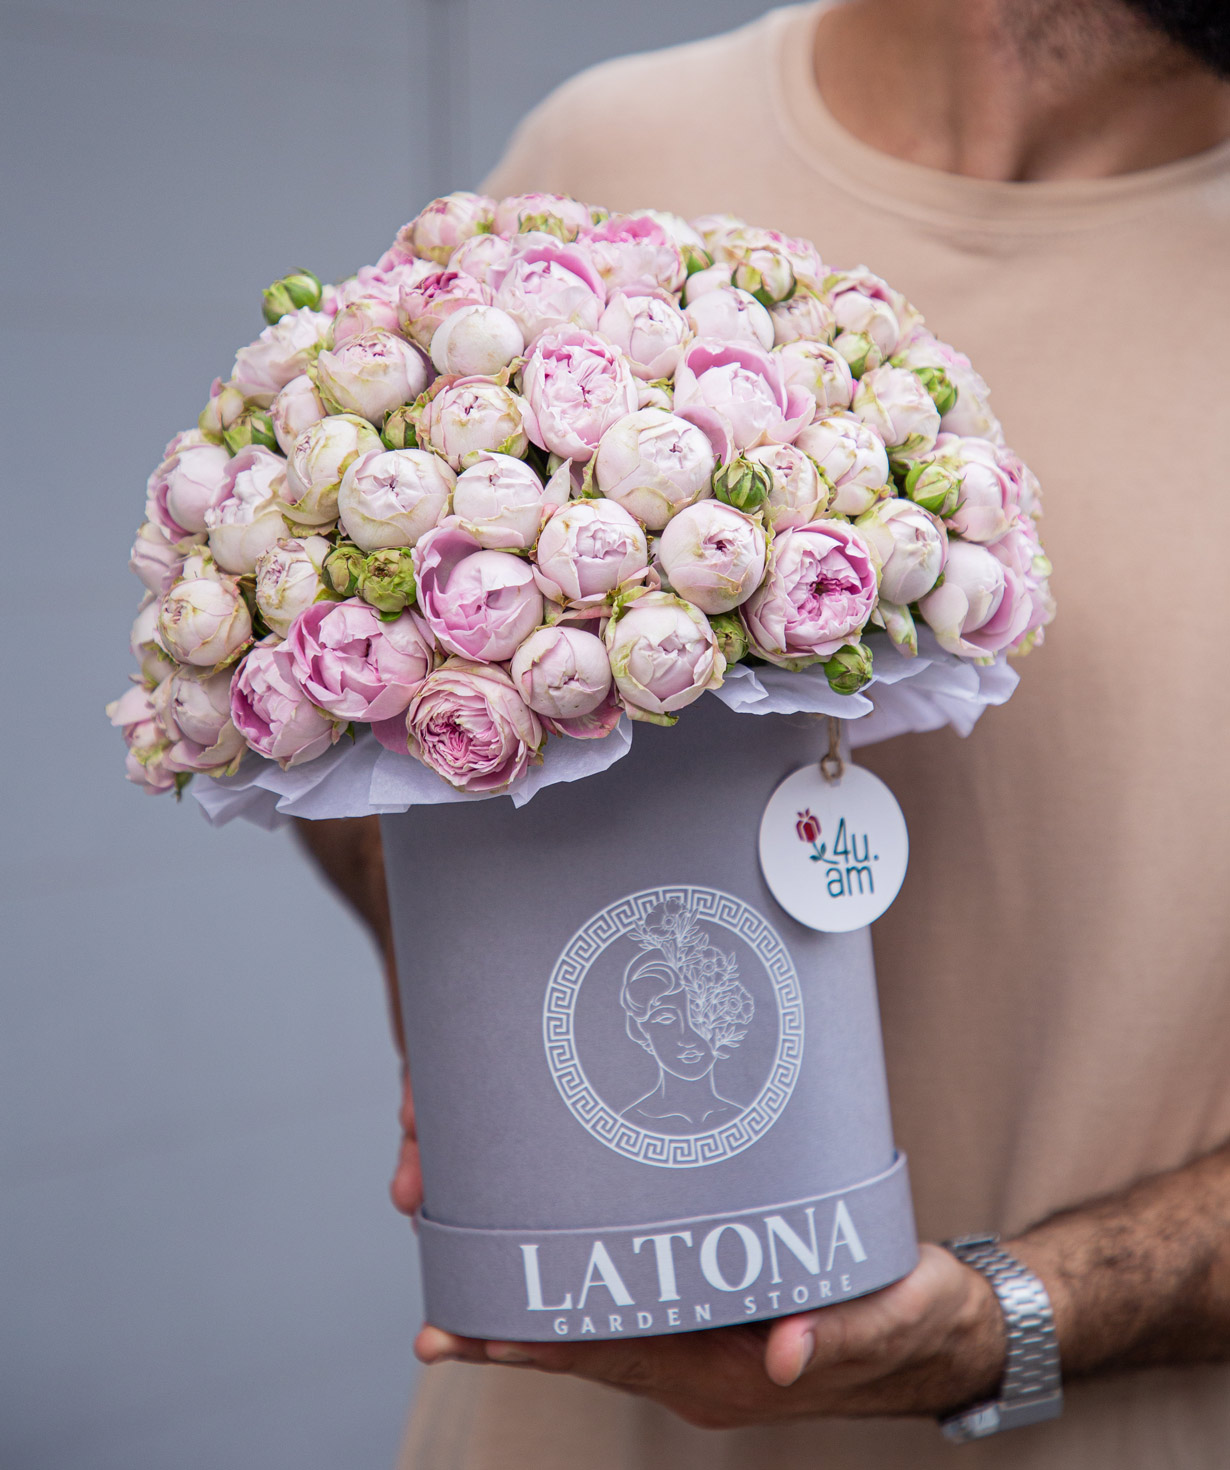 Composition `Latona` with peony roses